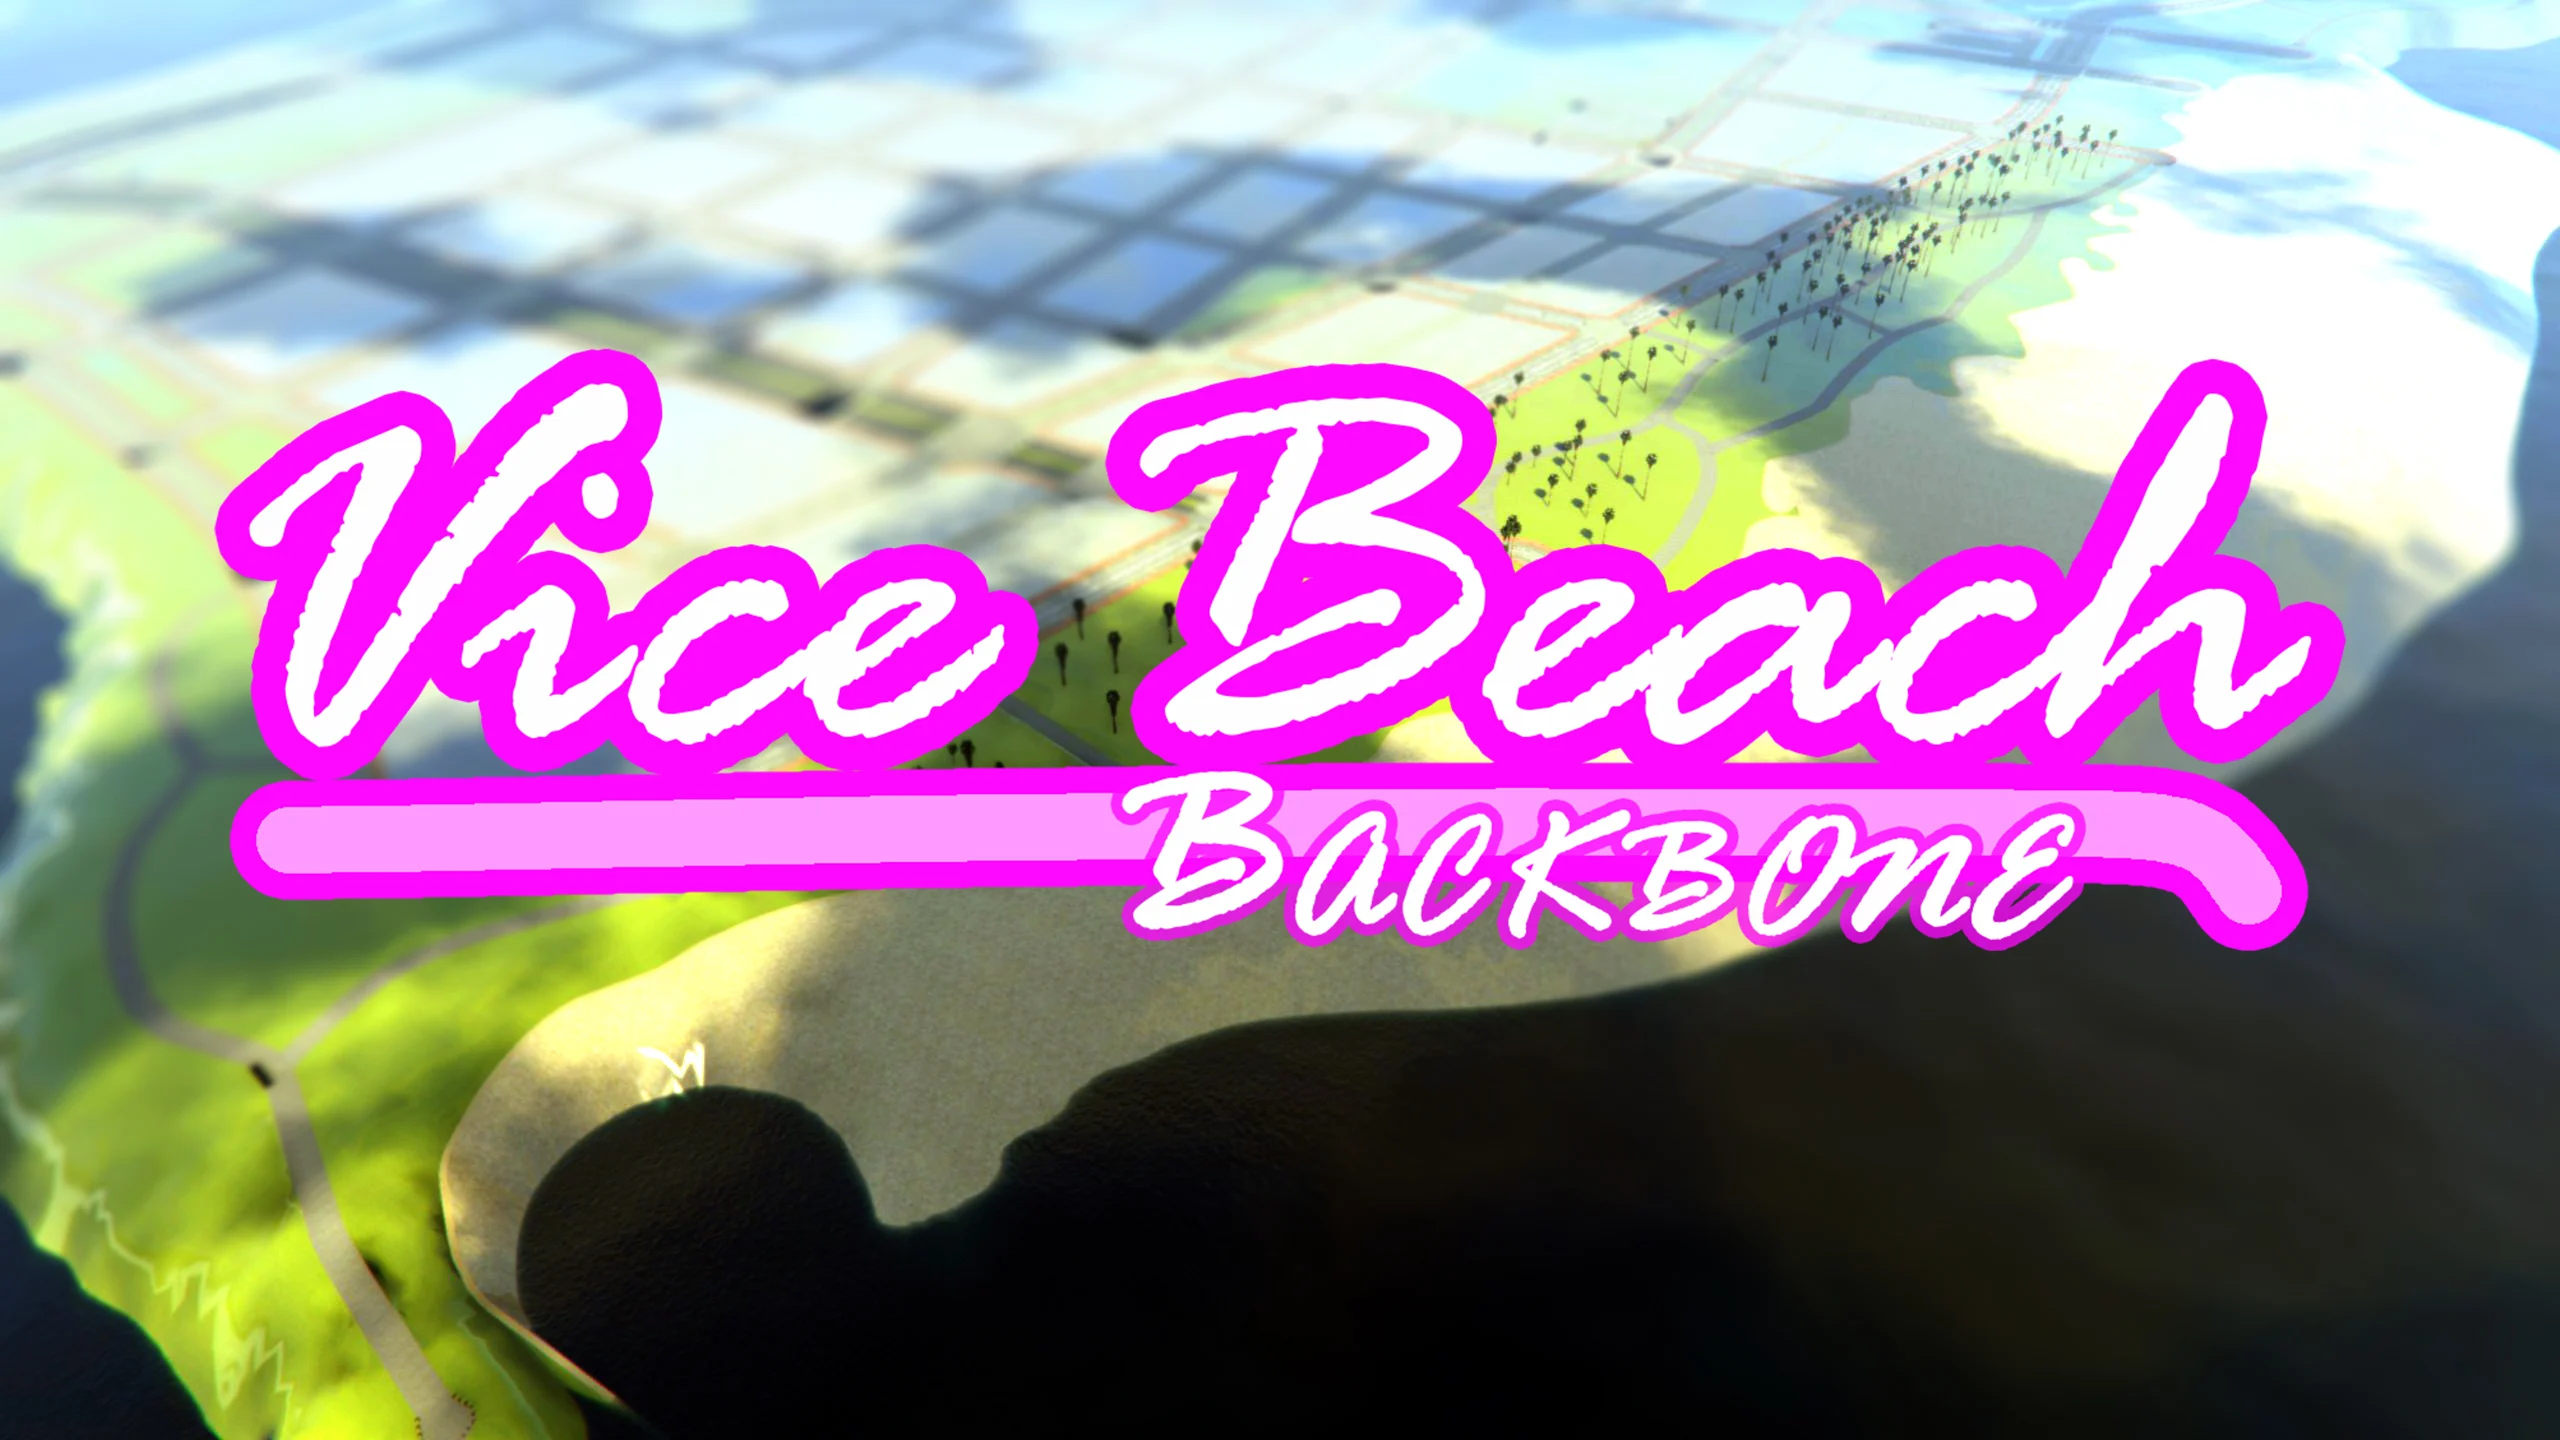 Vice Beach HD concept prototype 1.0